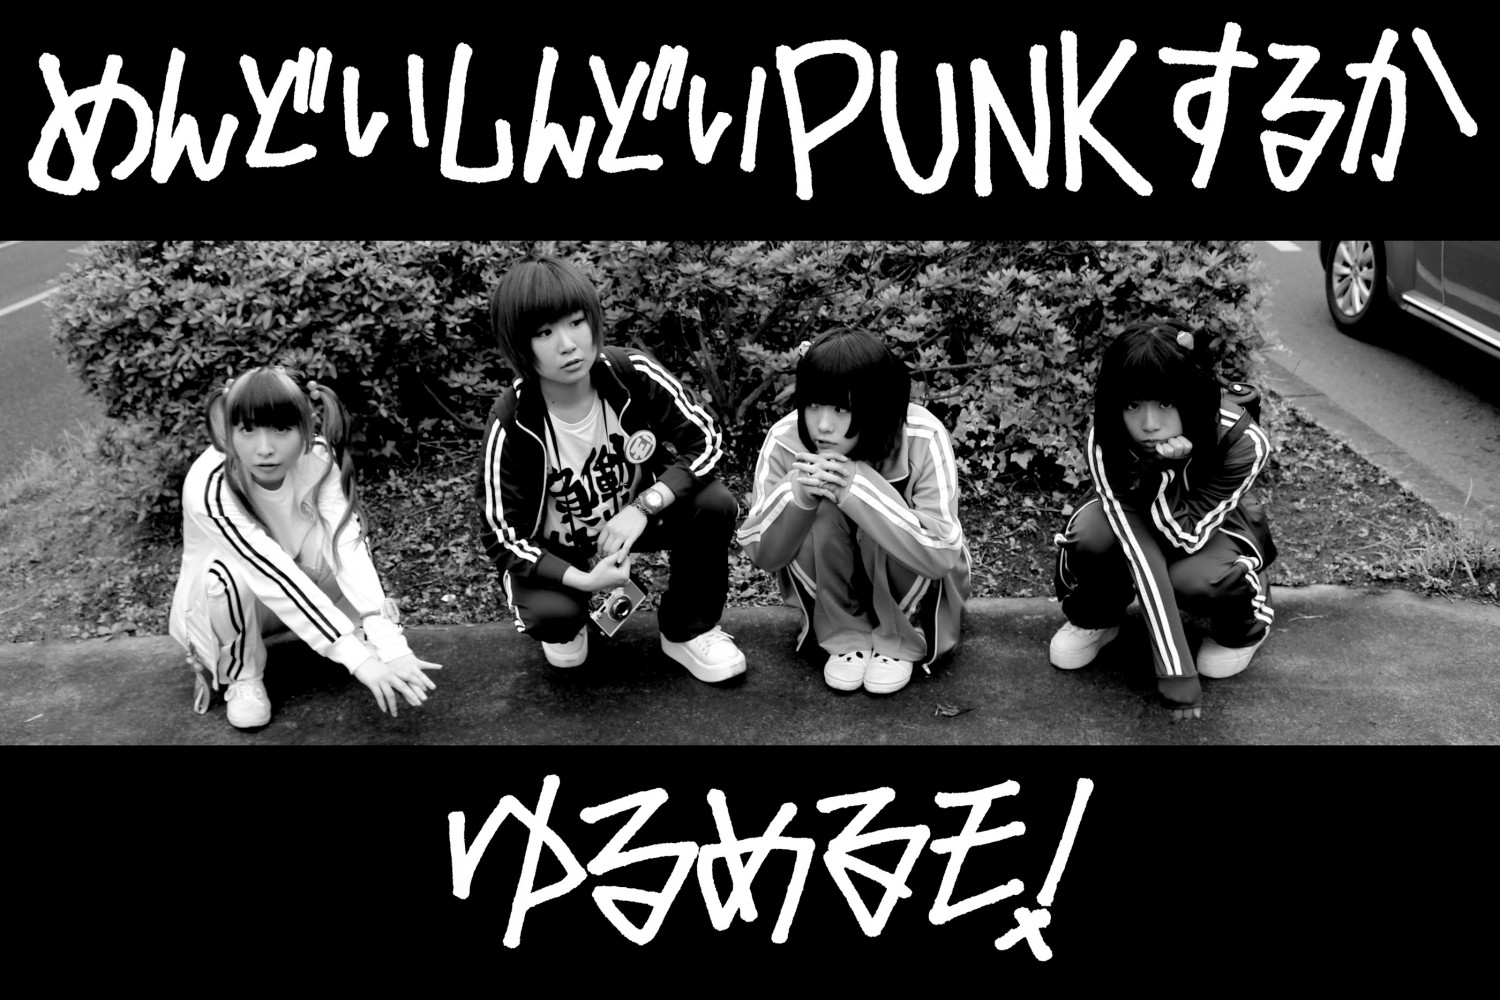 Punk’s Not Tired! Yurumerumo! Hit the Road in the MV for “Mendoi Shindoi PUNK Suru ka”!